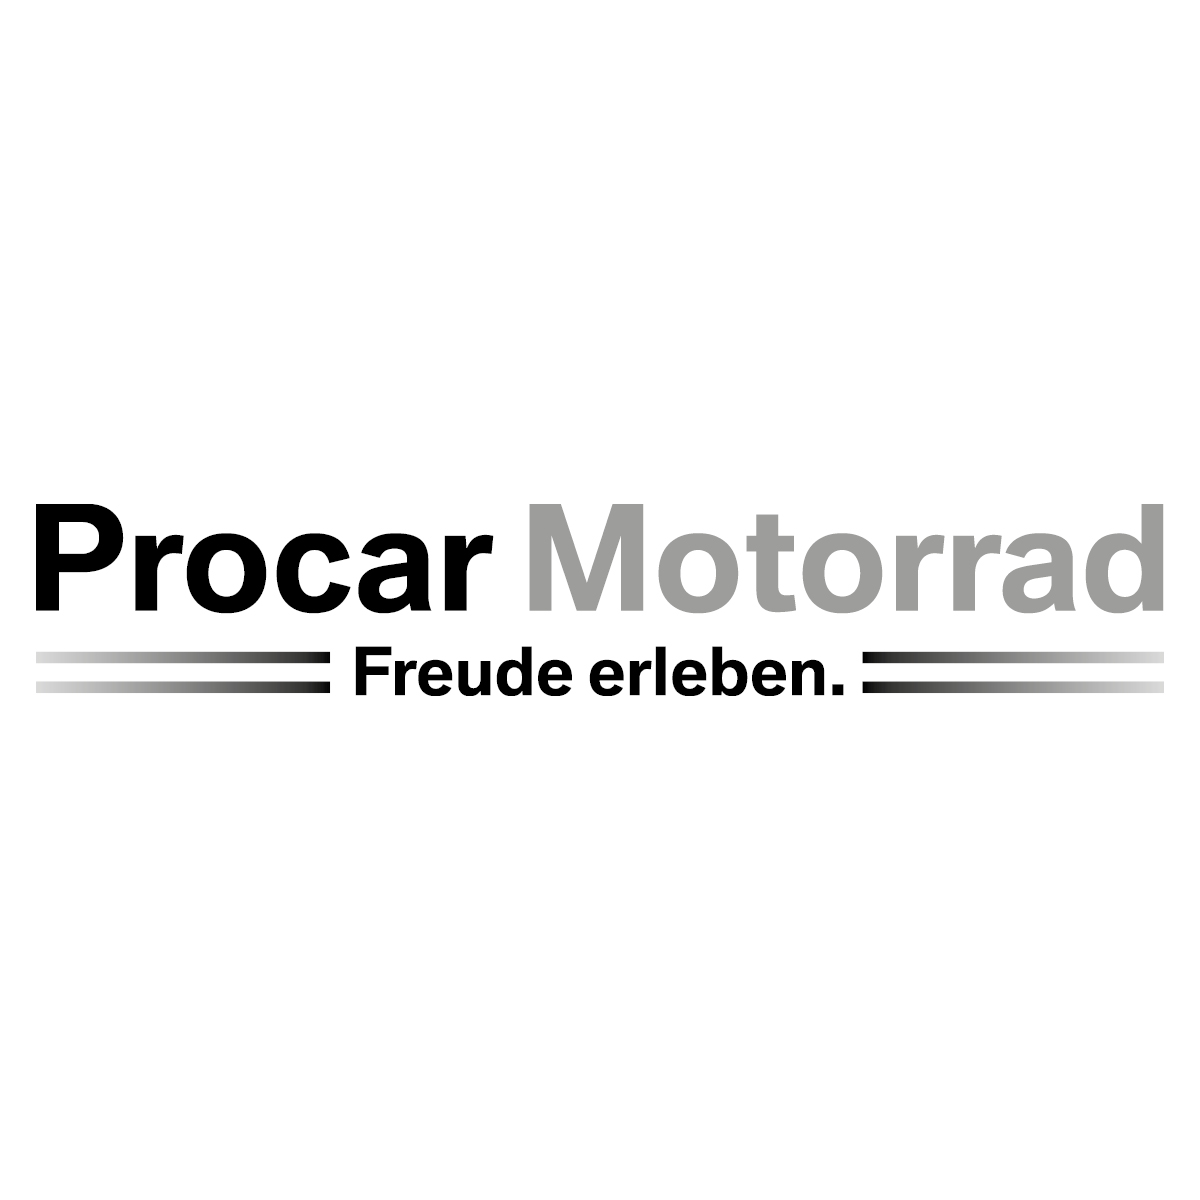 Bild der Procar Motorrad - Münster